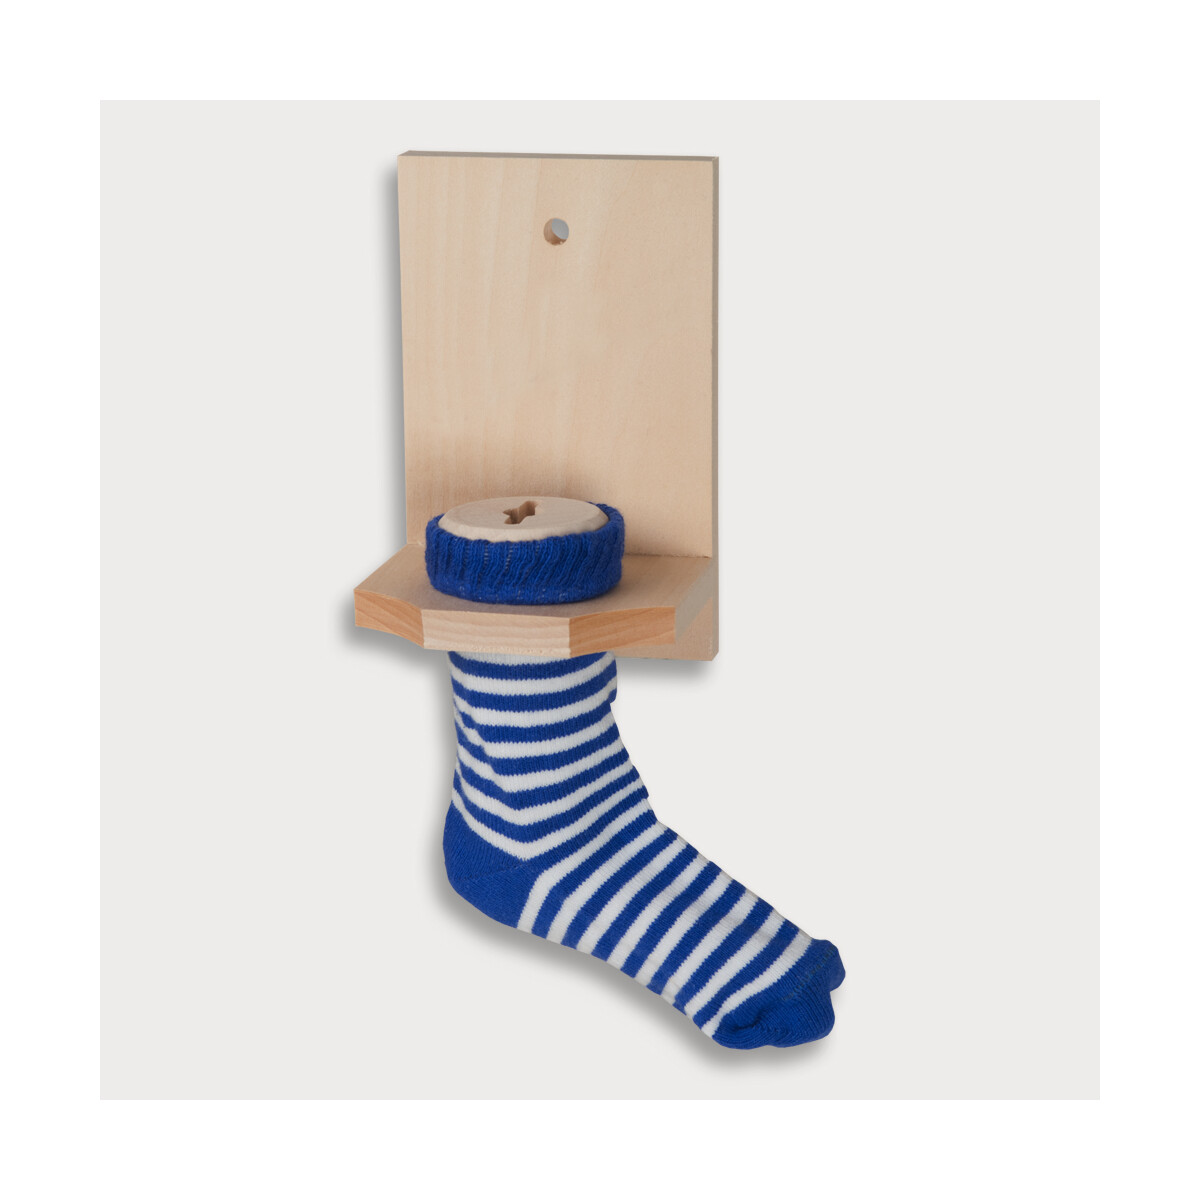 Sparstrumpf blaue Socke Buchenholz